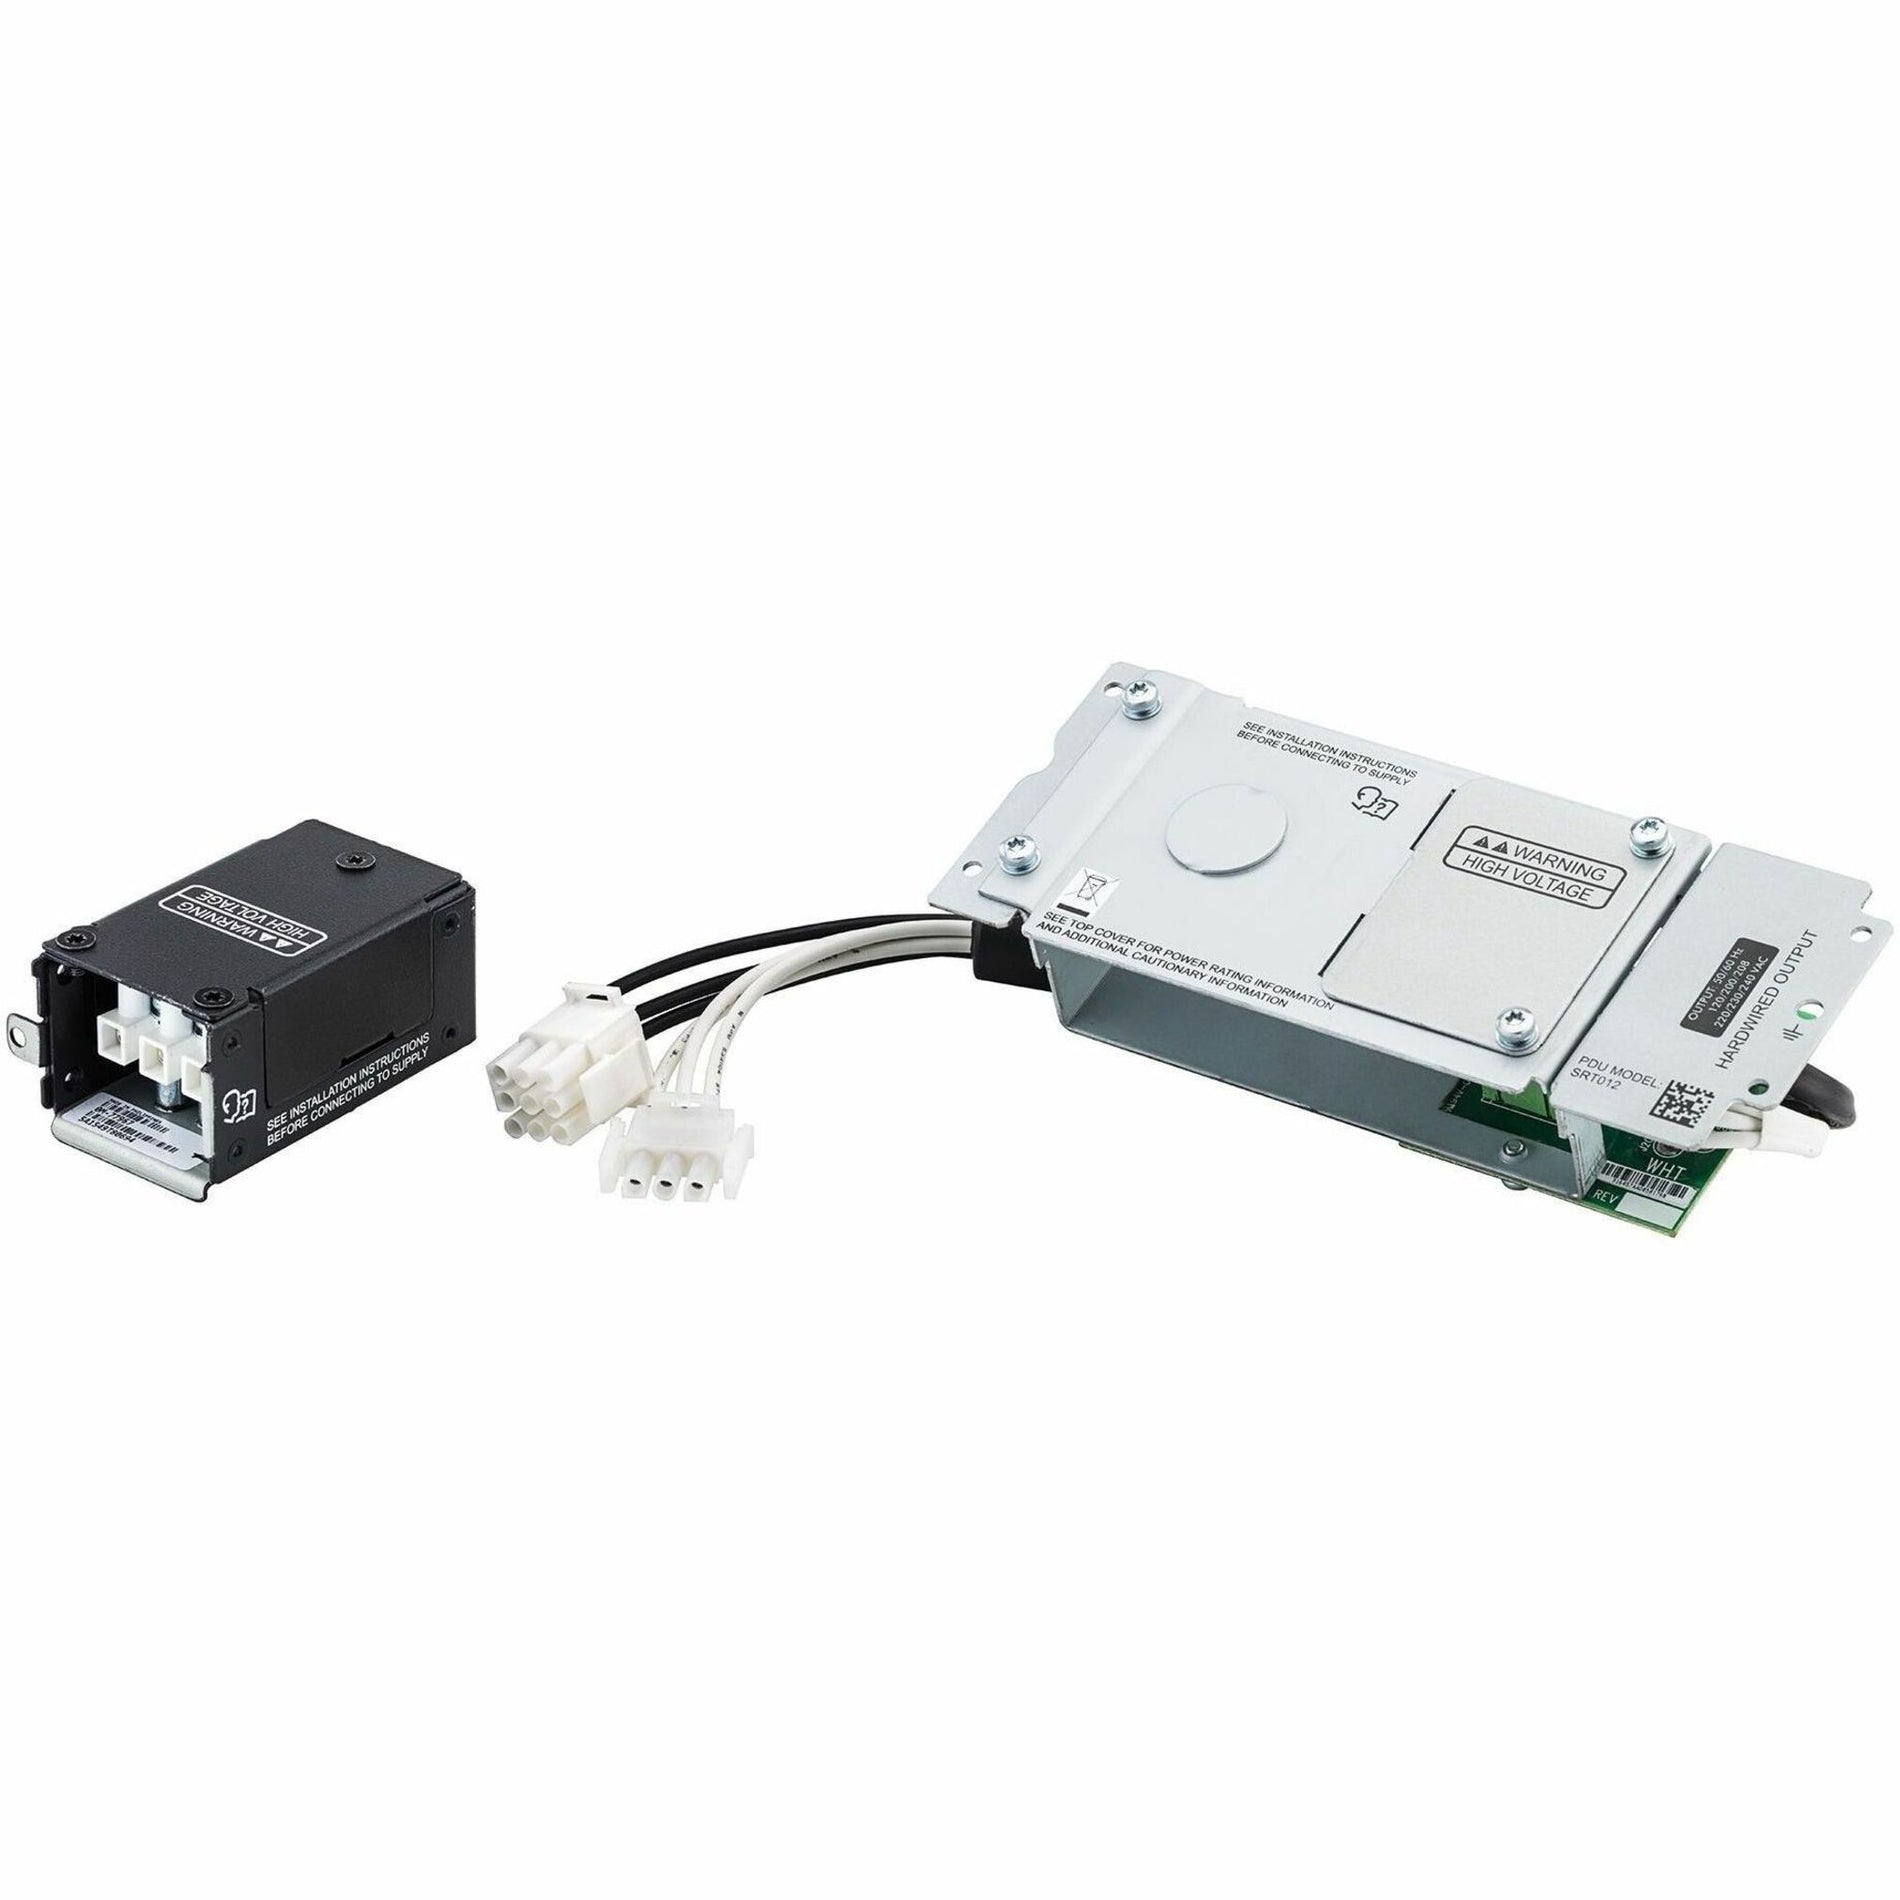 APC Smart-UPS SRT012 Input/Output Hardwire Kit, Environmentally Friendly RoHS Certified